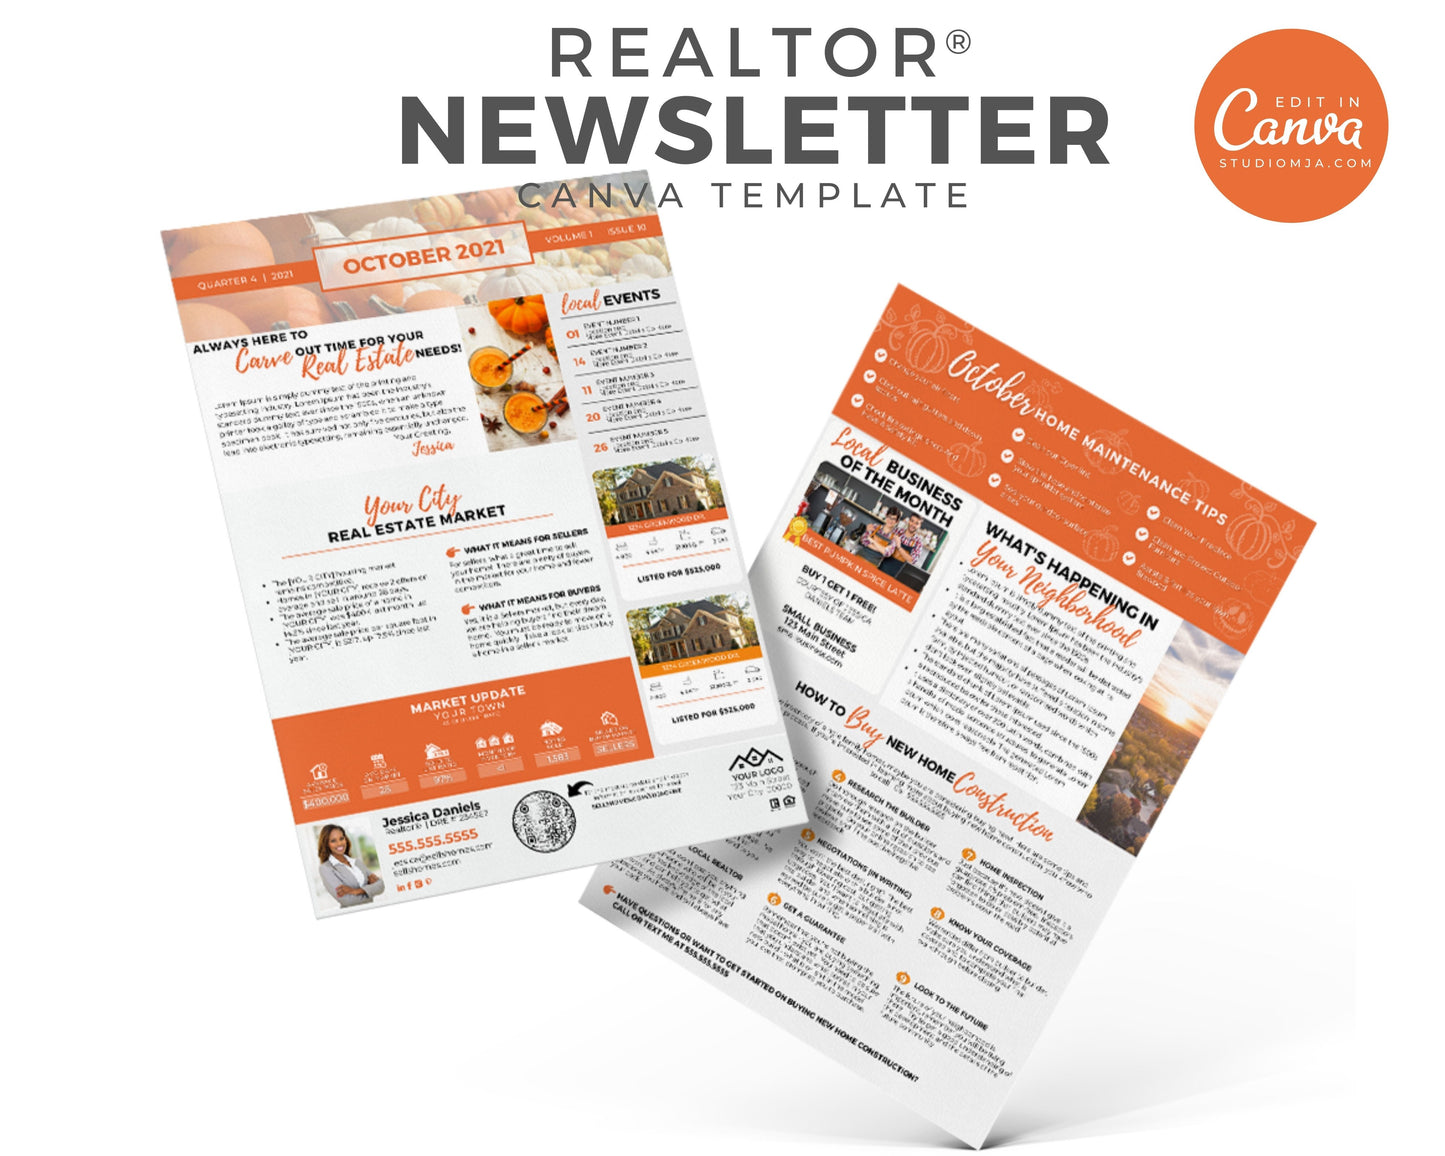 Realtor Newsletter Template - October